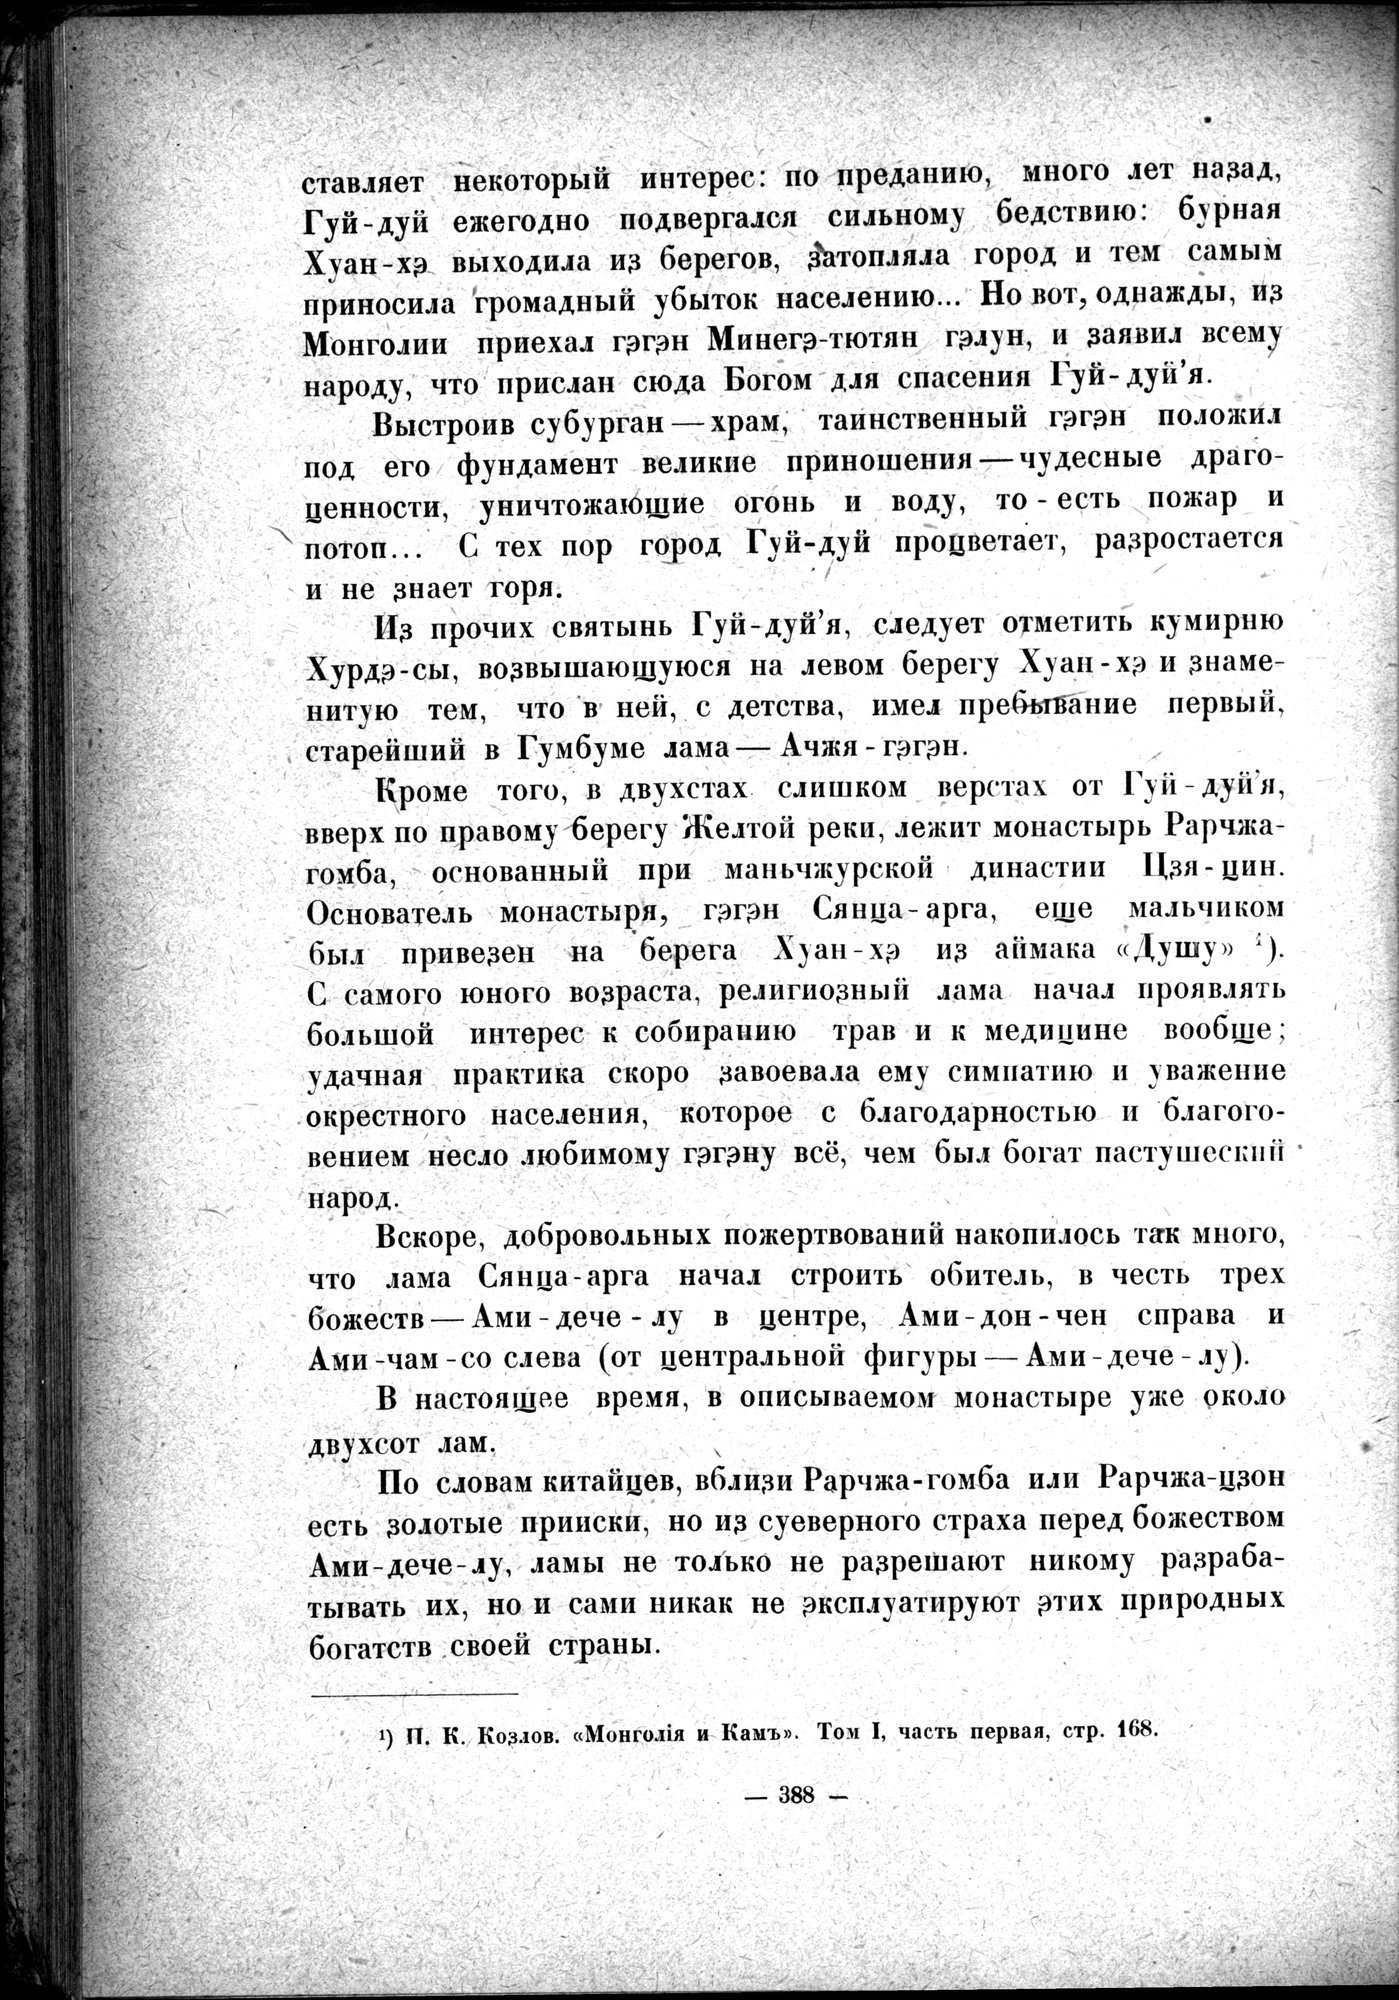 Mongoliya i Amdo i mertby gorod Khara-Khoto : vol.1 / Page 442 (Grayscale High Resolution Image)